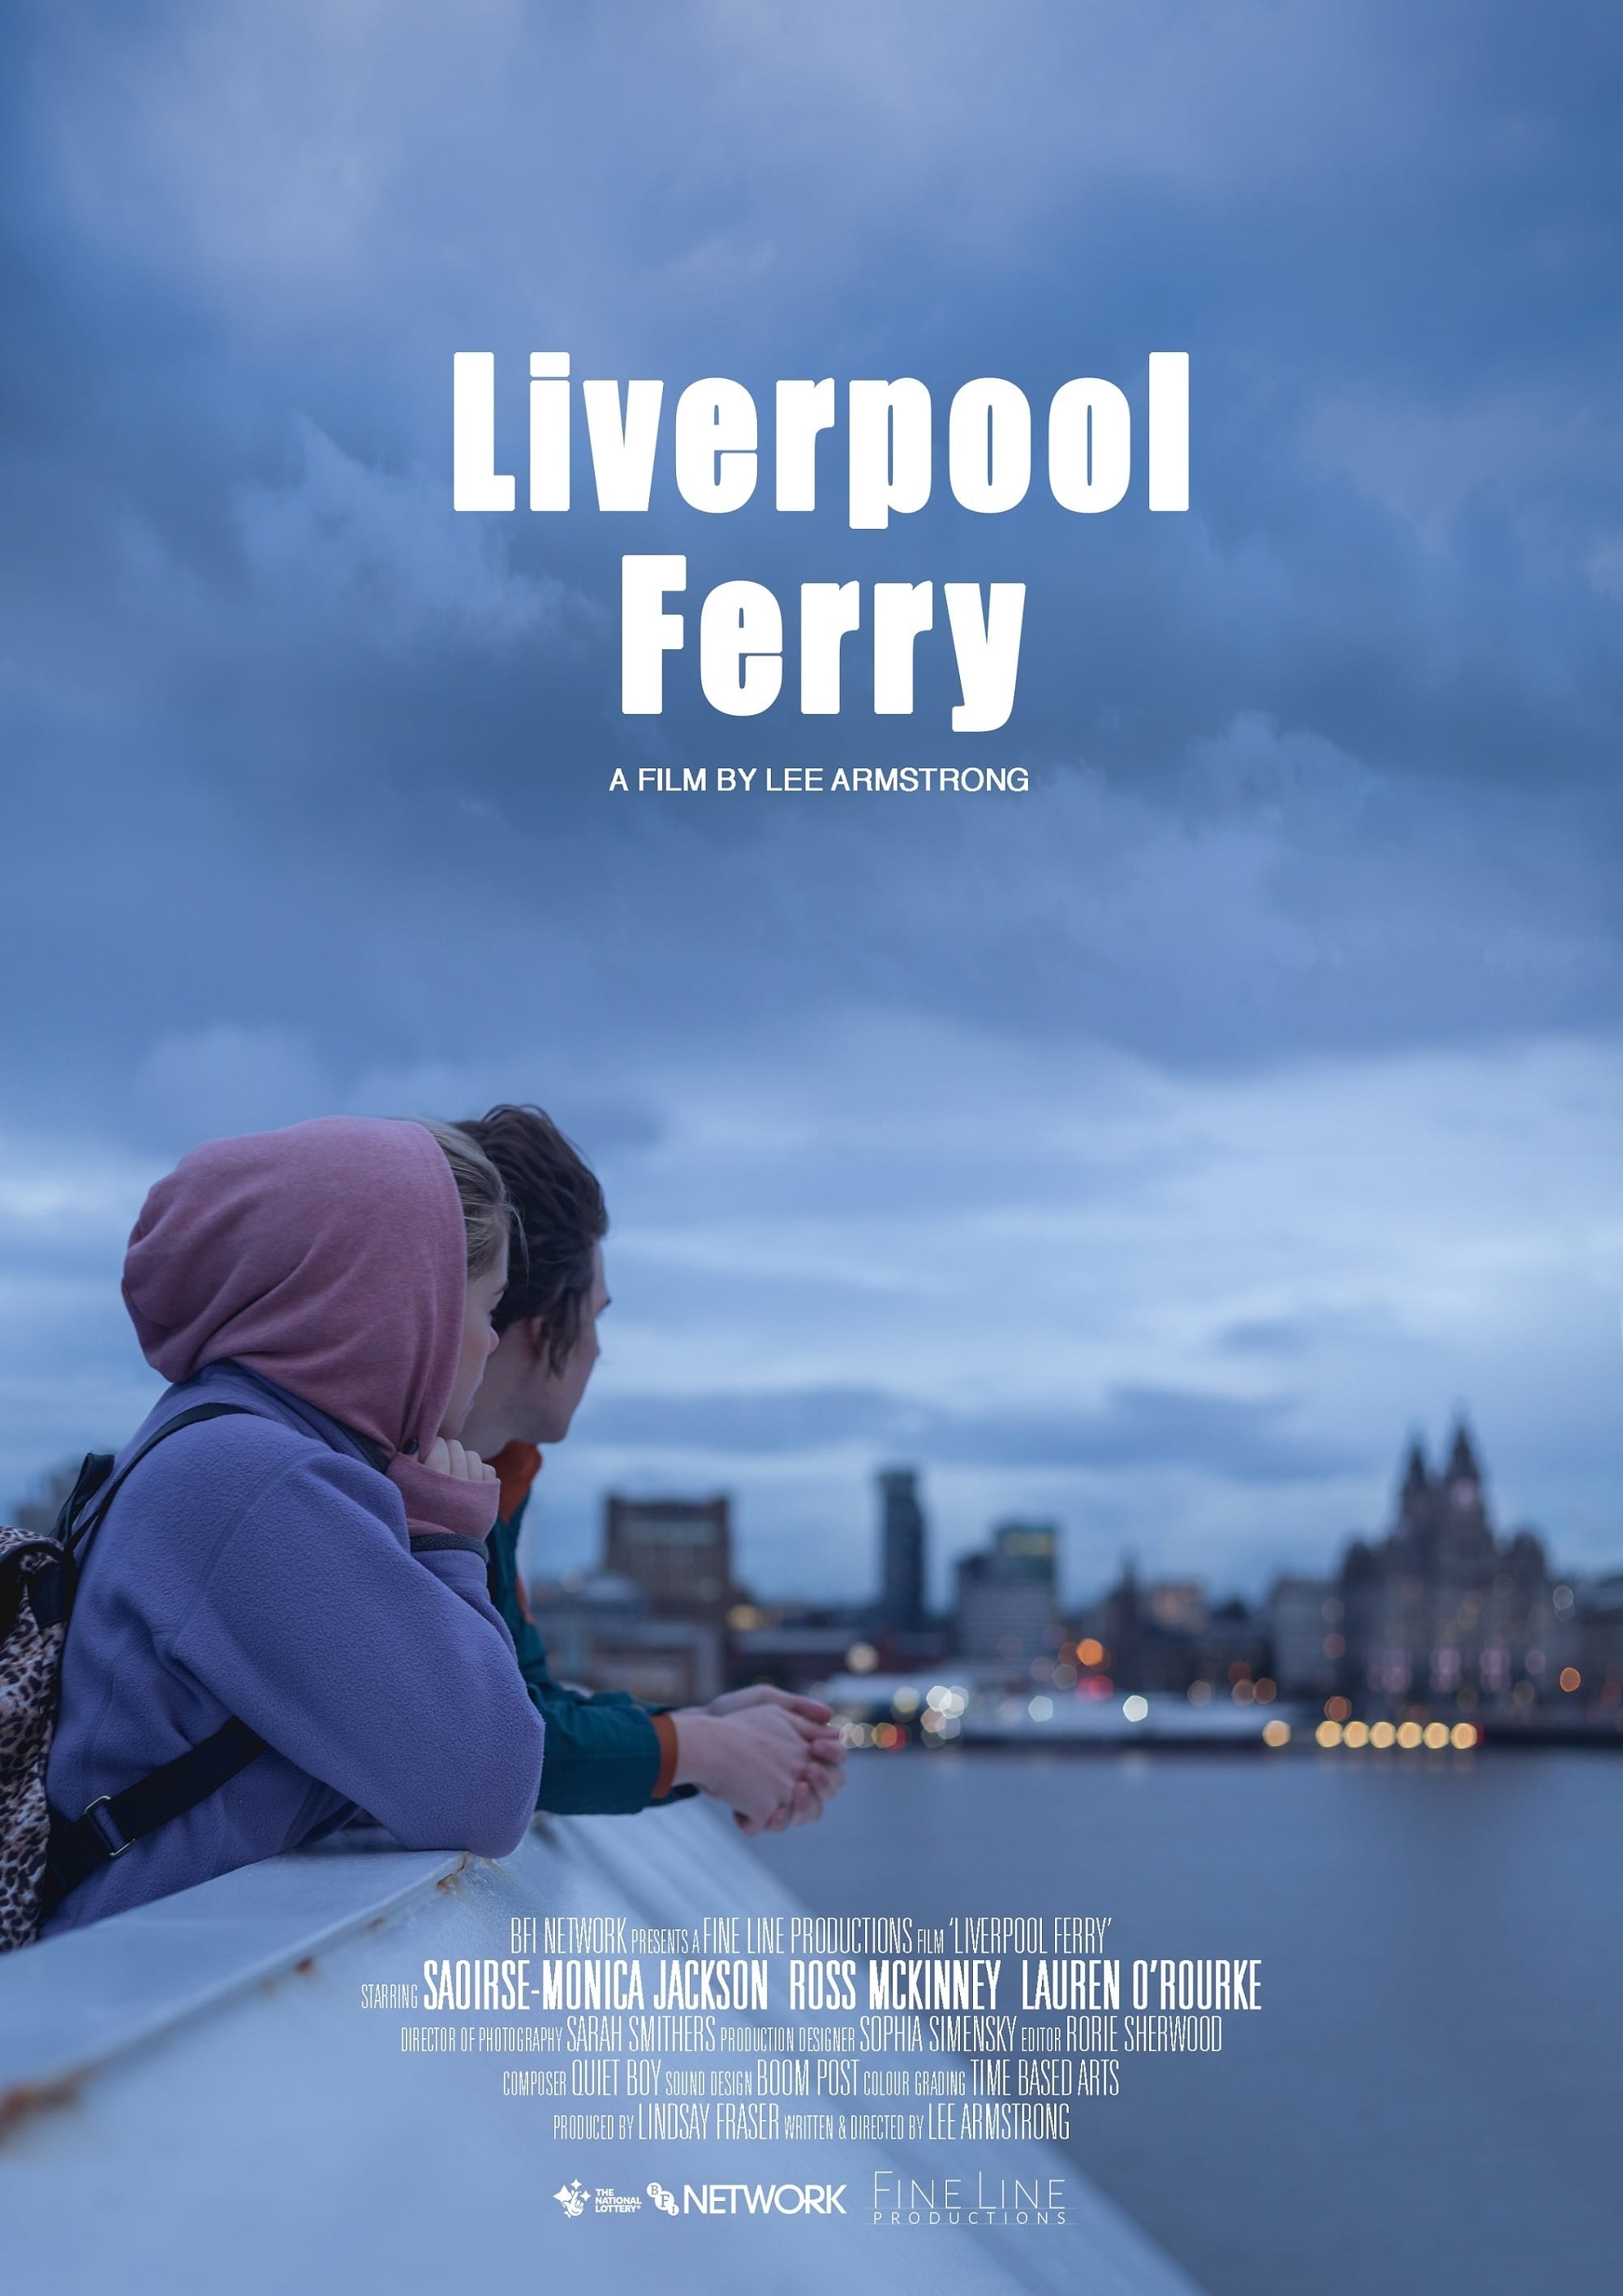 Liverpool Ferry